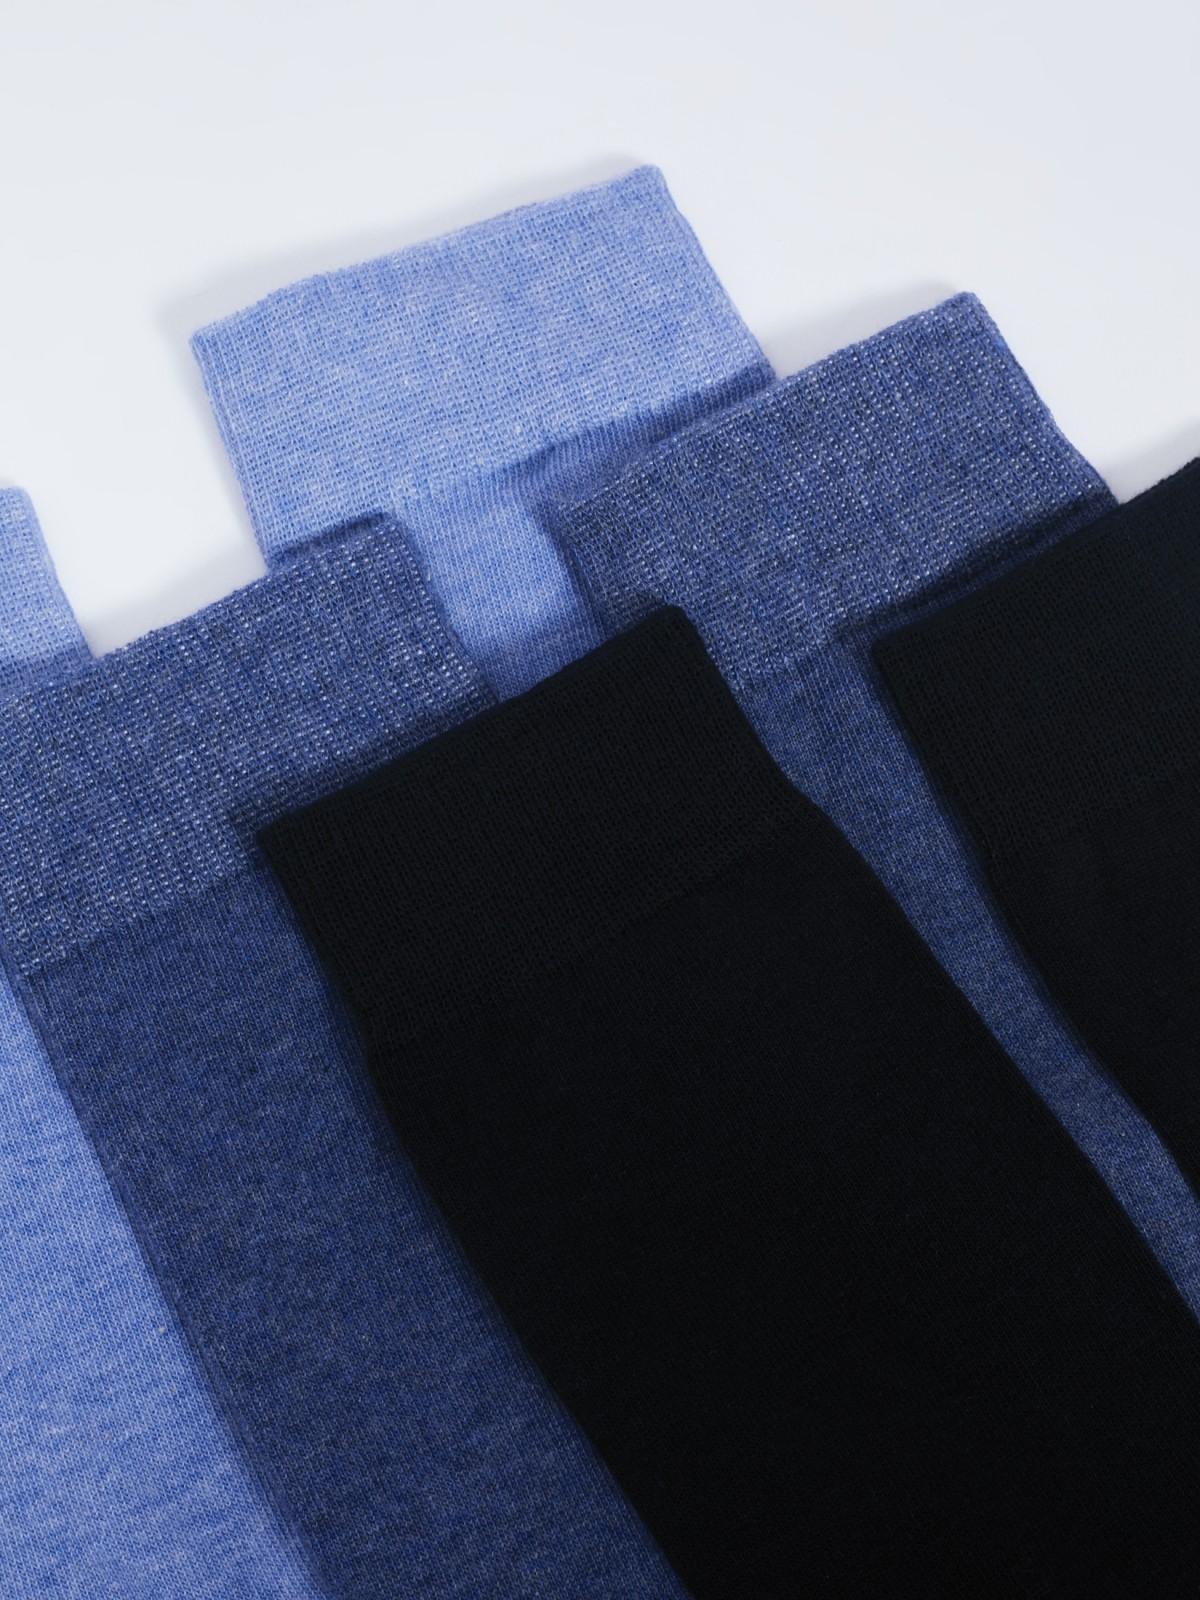 Набор носков (3 пары в комплекте) zolla 01331990Z025, цвет темно-синий, размер 25-27 - фото 3